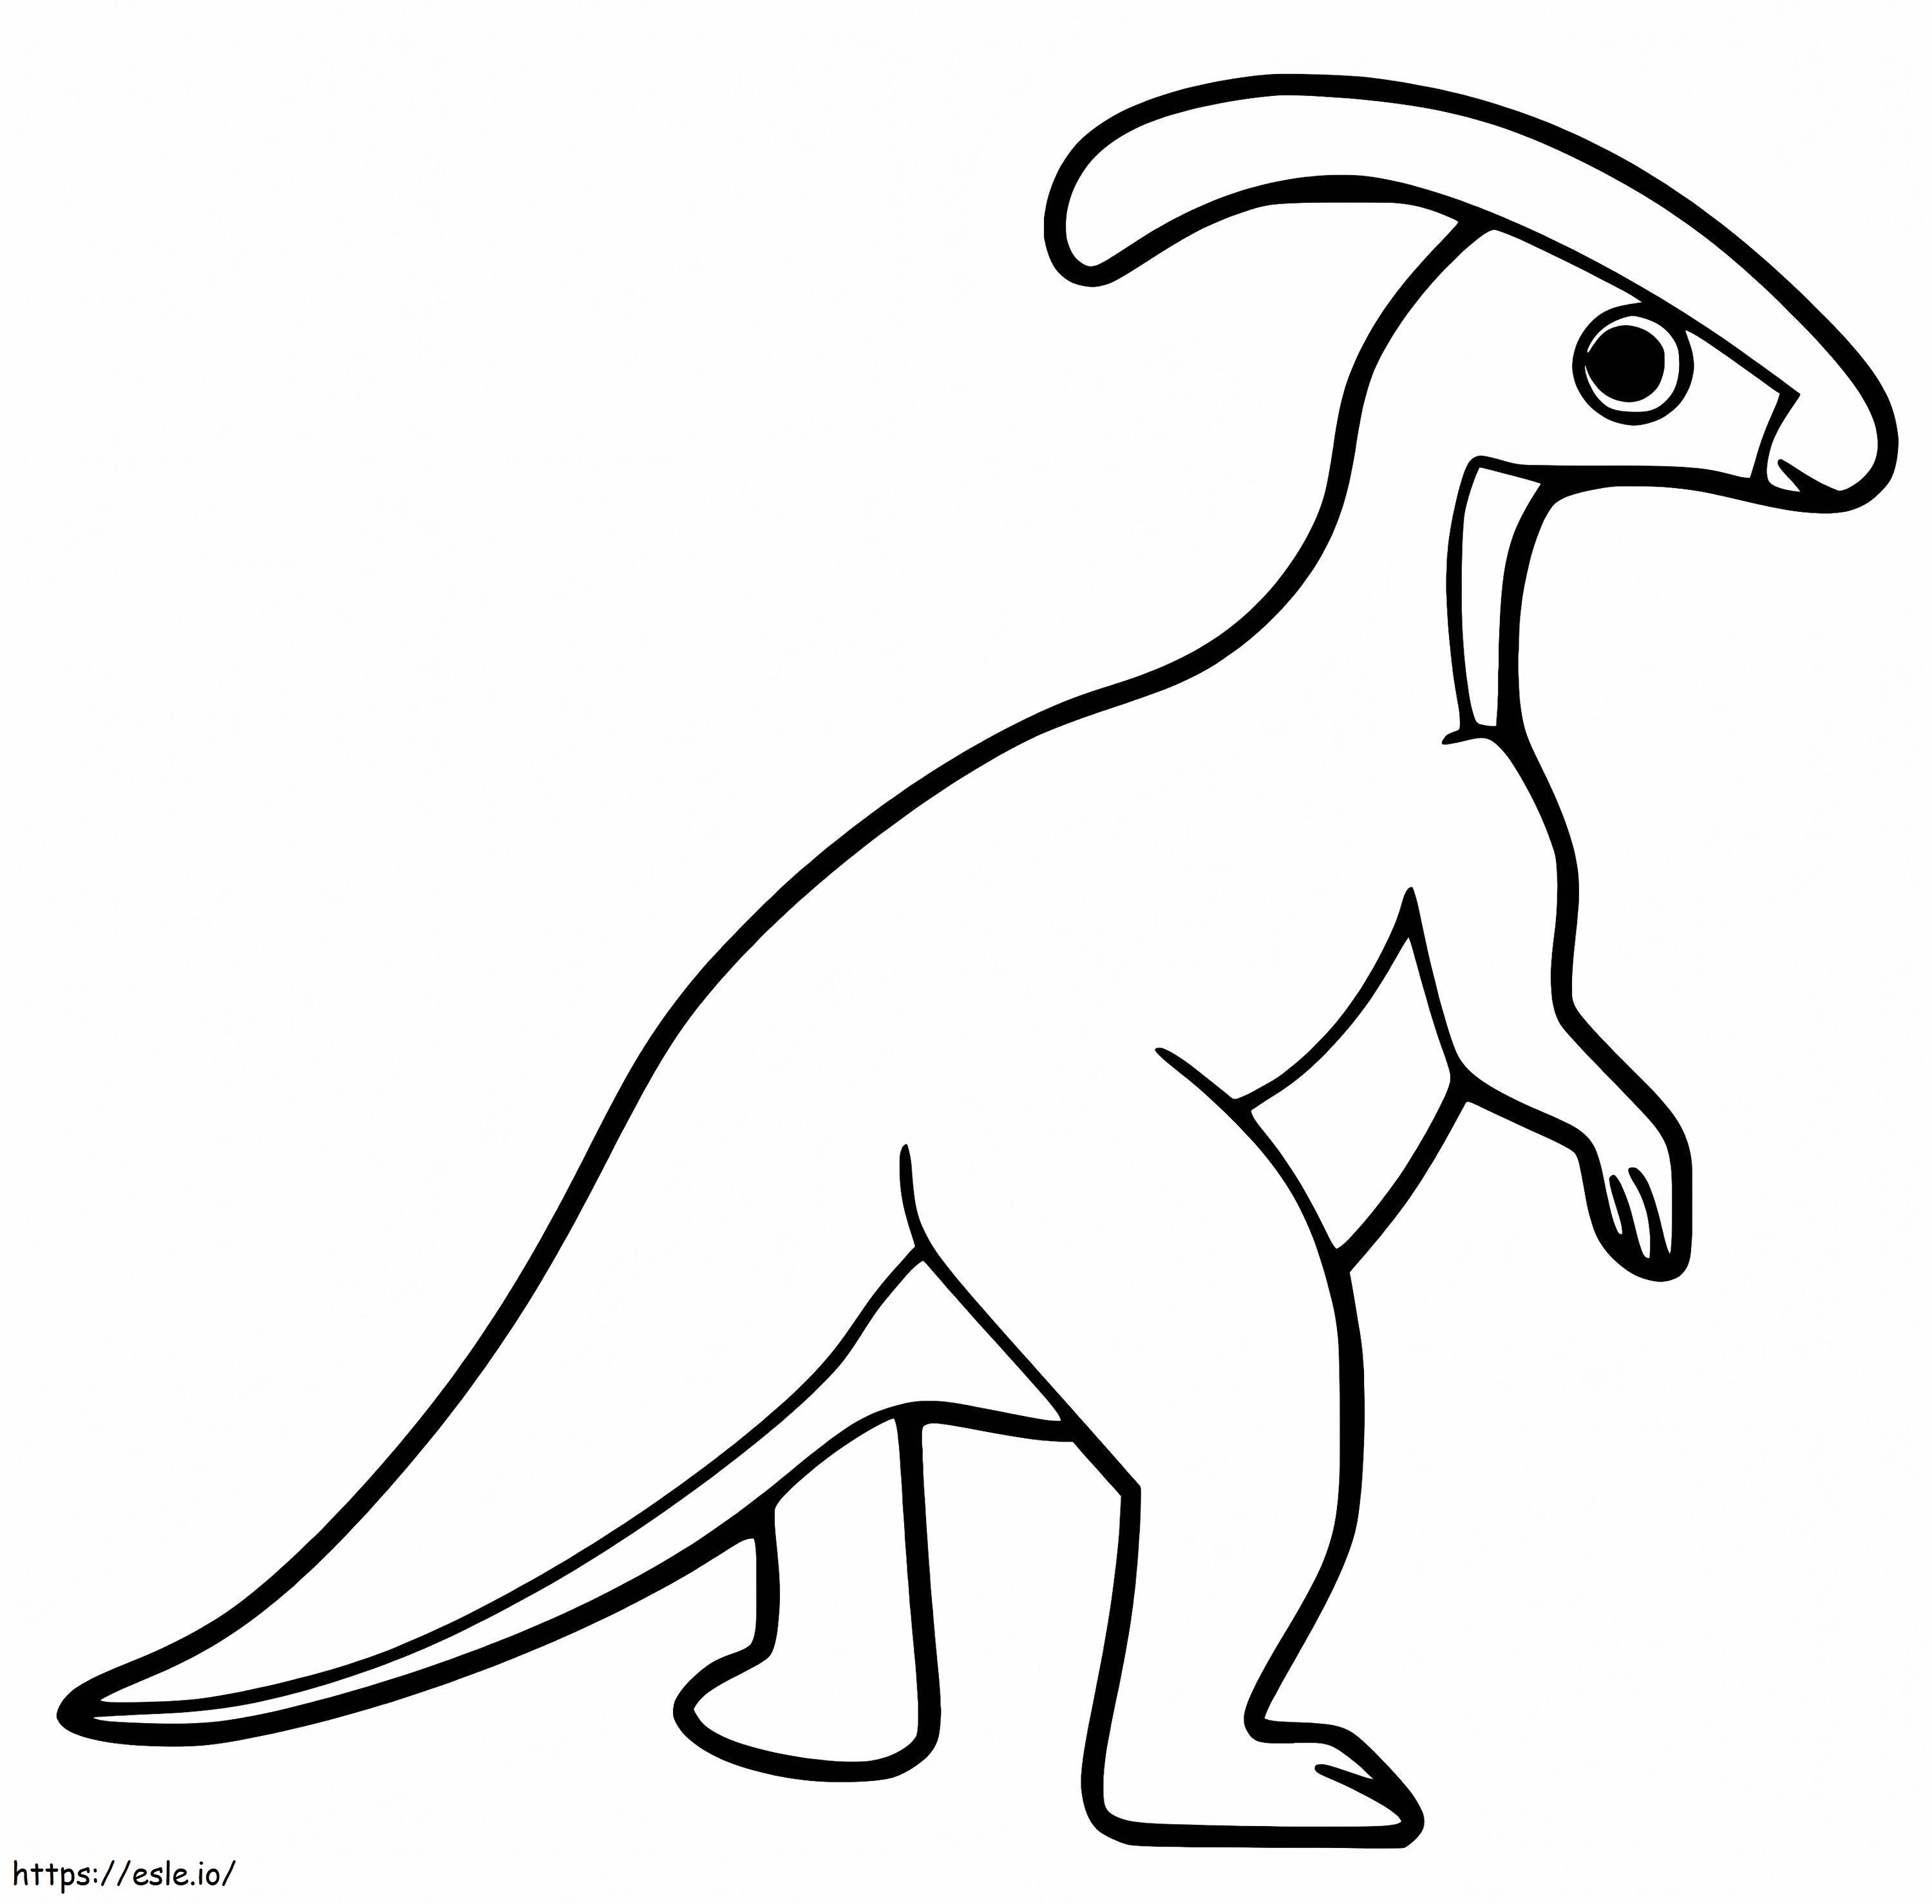 Cute Parasaurolophus coloring page